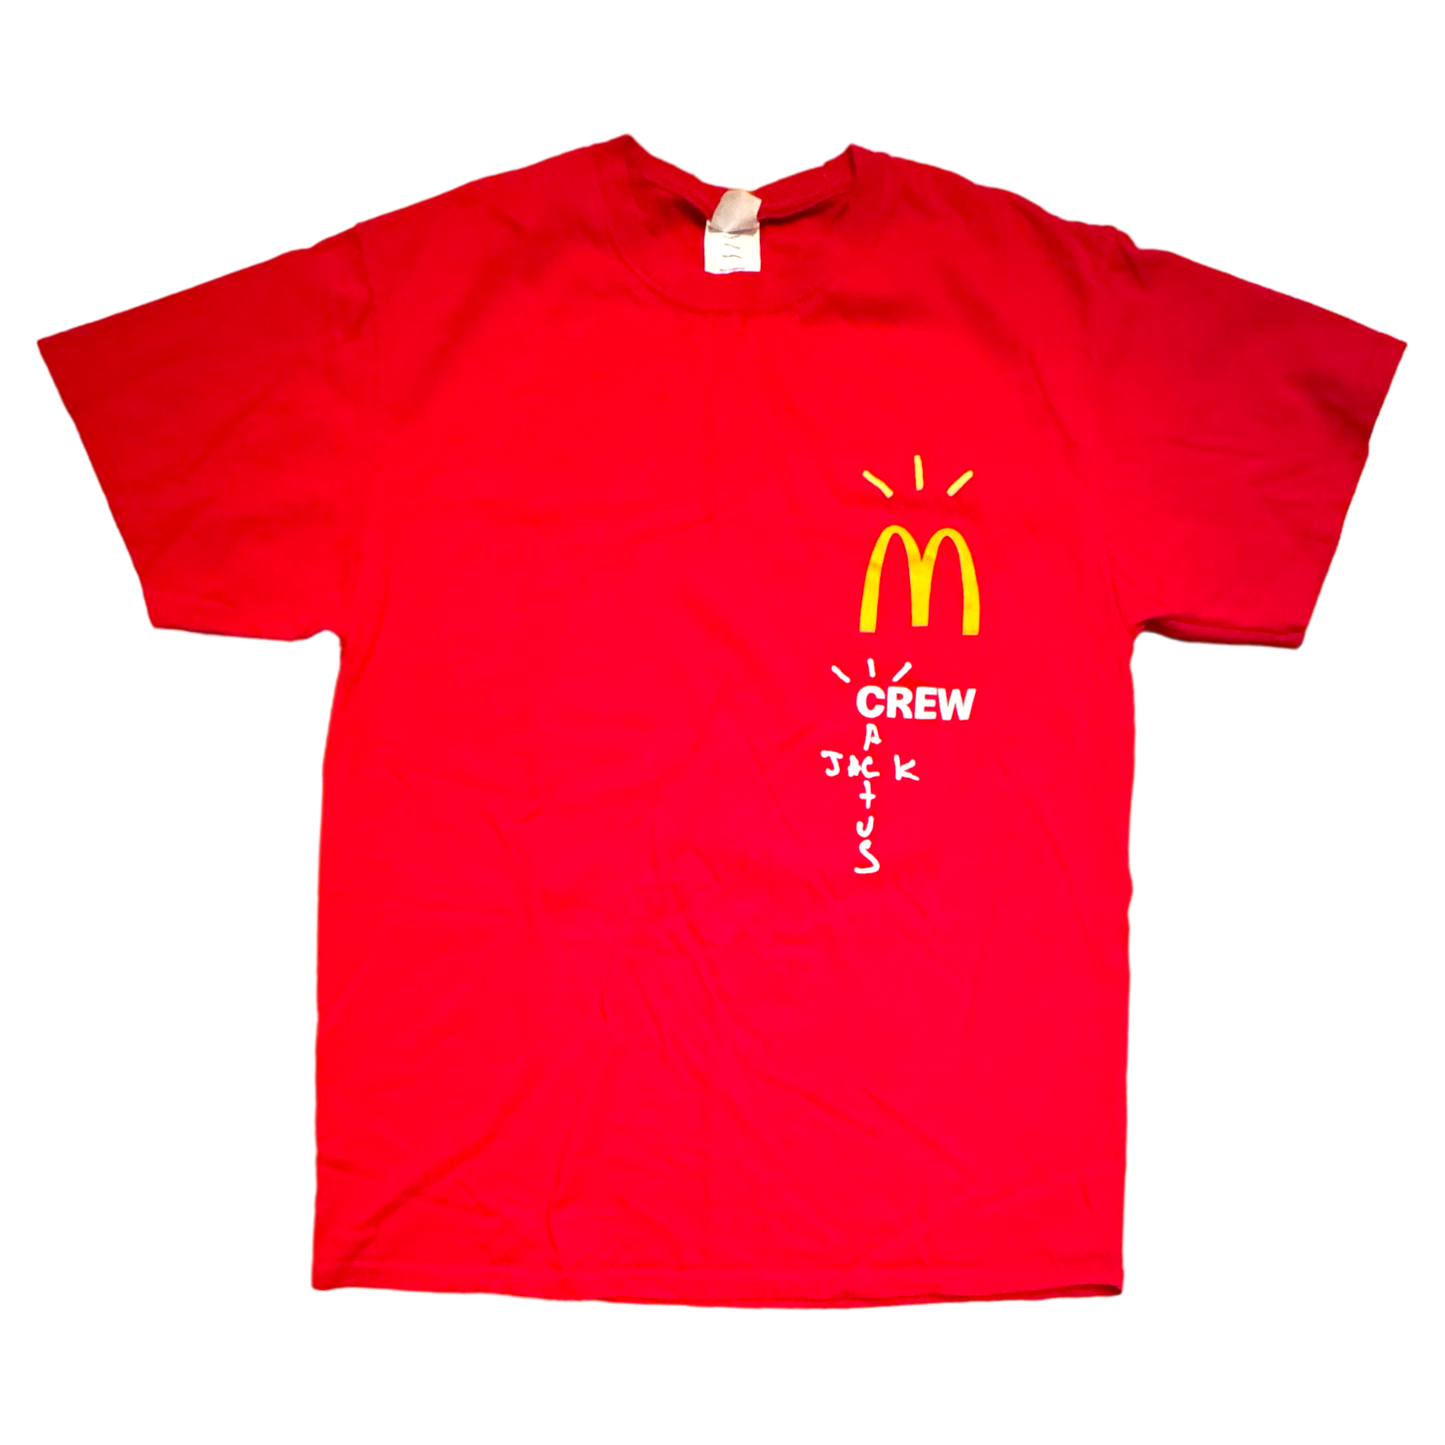 Port Authority - McDonalds Travis Scott Cactus Jack Crew Red T-Shirt